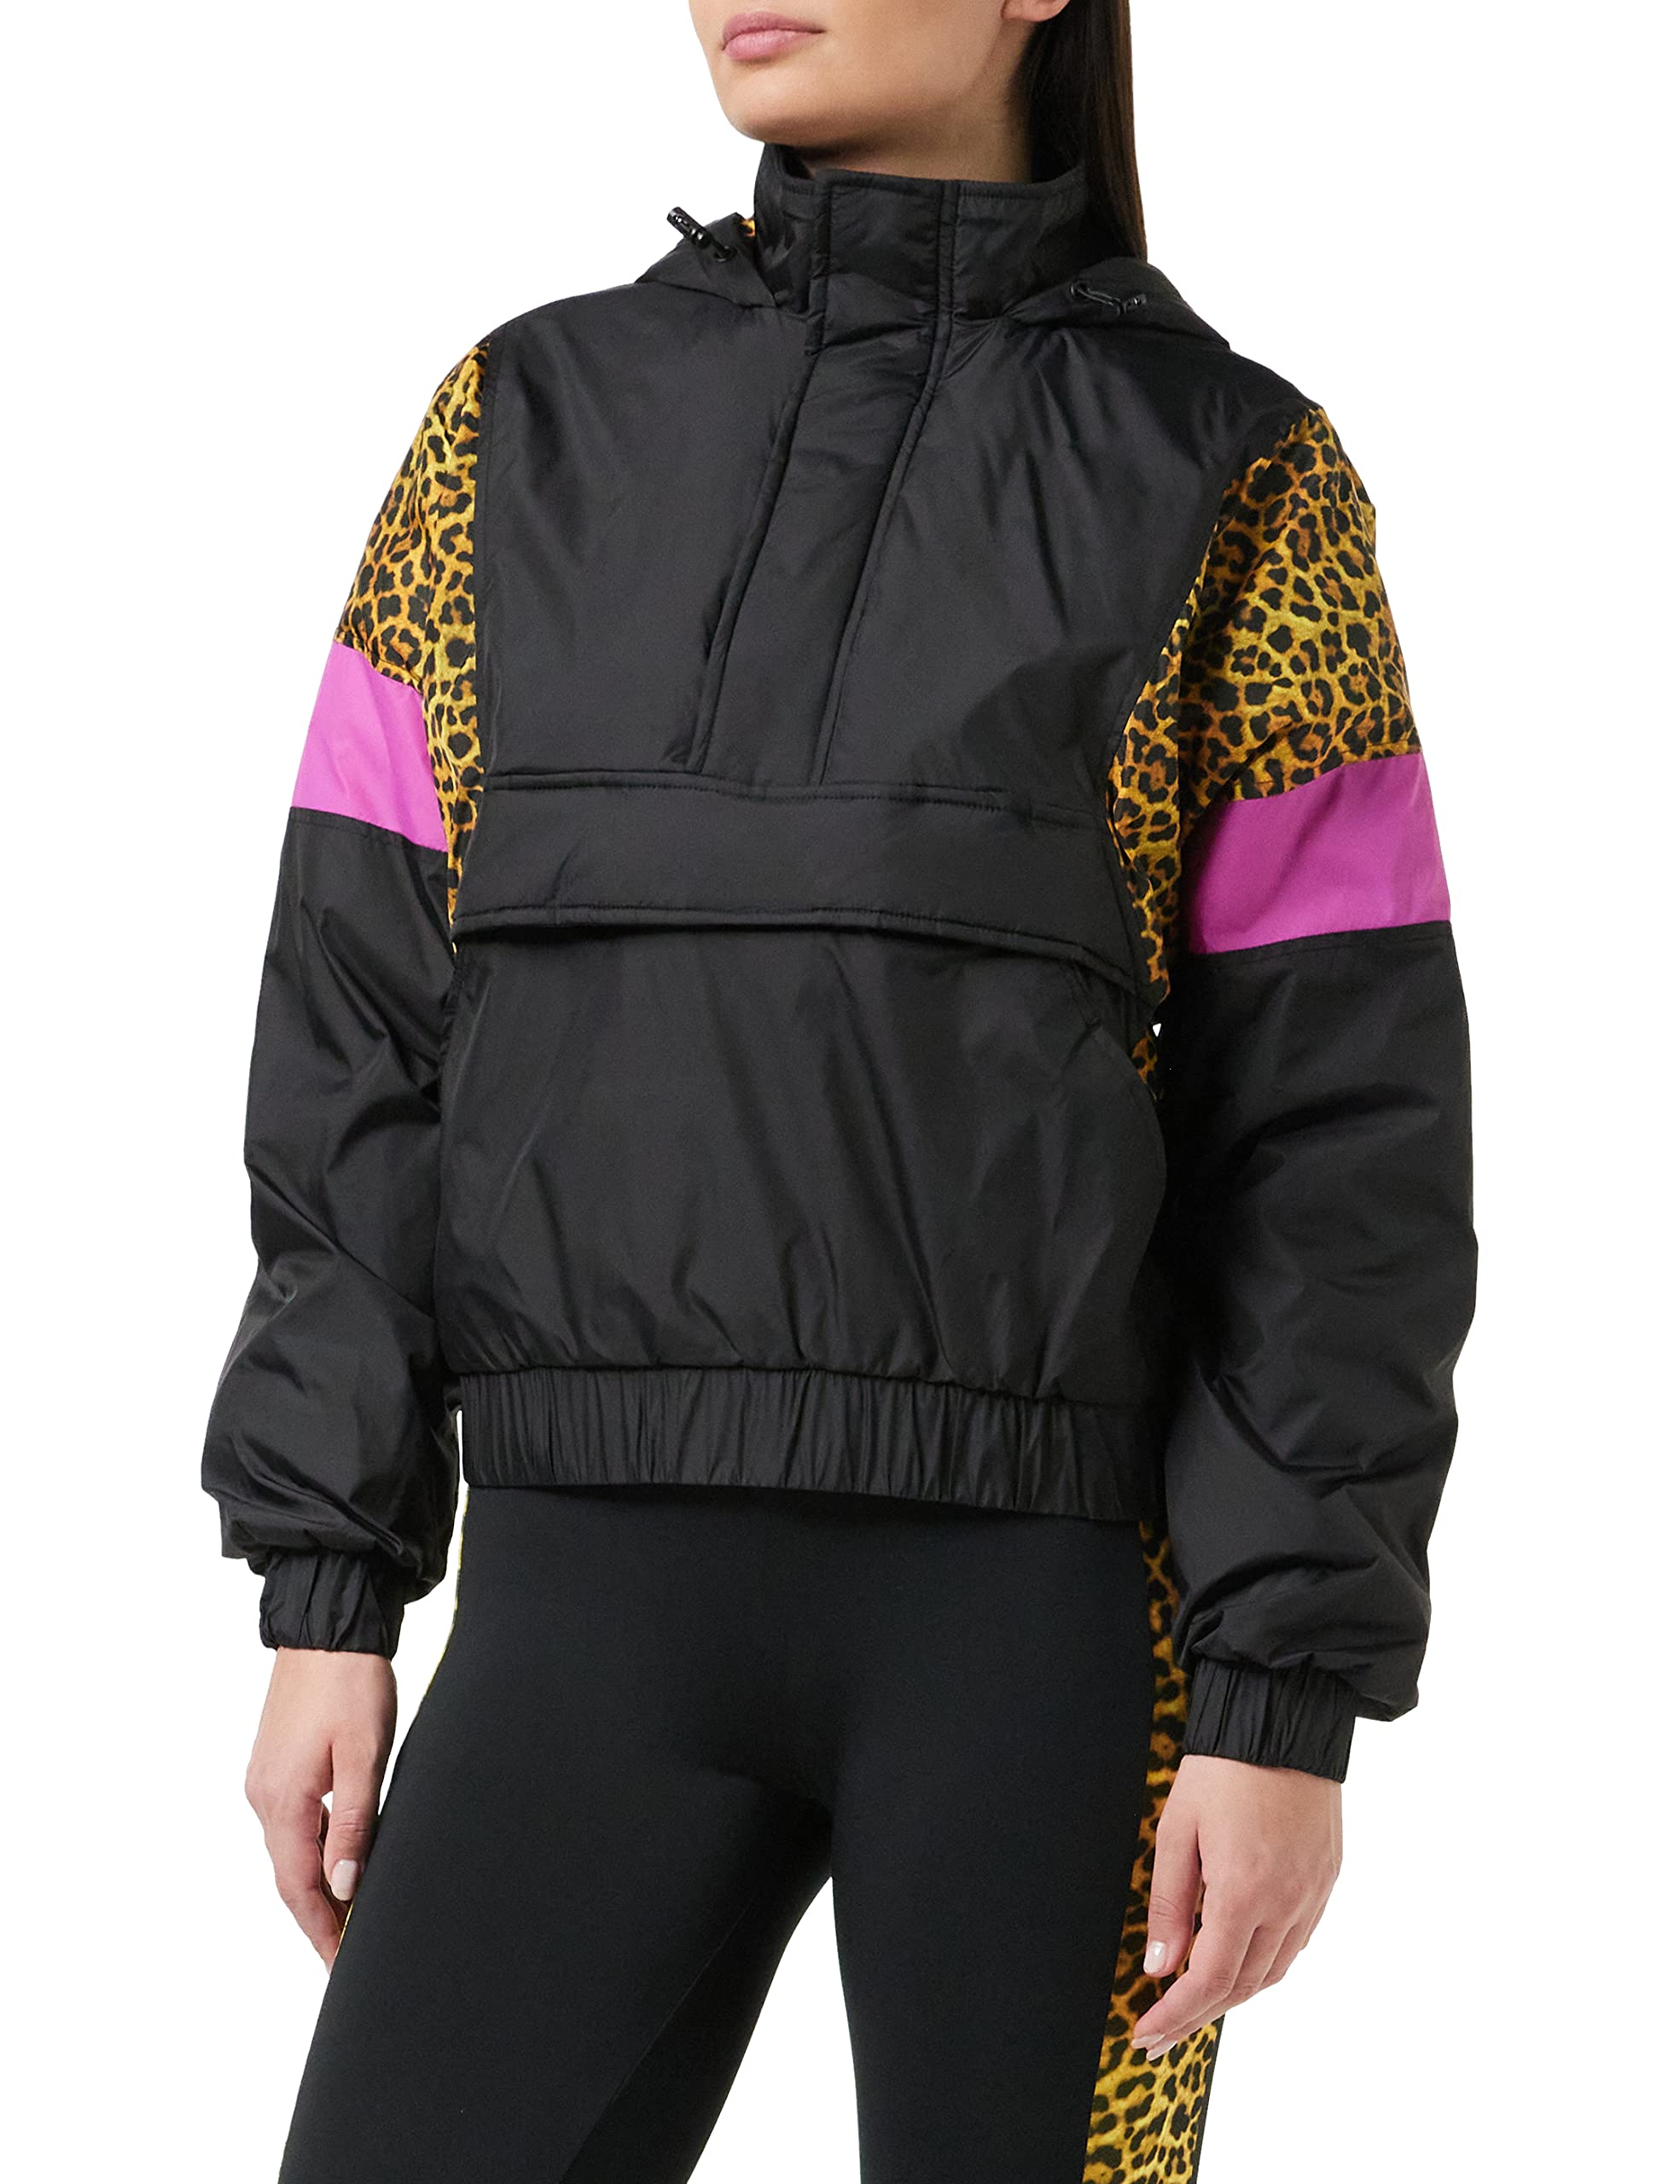 Urban Classics Damen Ladies AOP Mixed Pull Over Jacket Jacke, Mehrfarbig (Black/Leo 01945), Small (Herstellergröße: S)